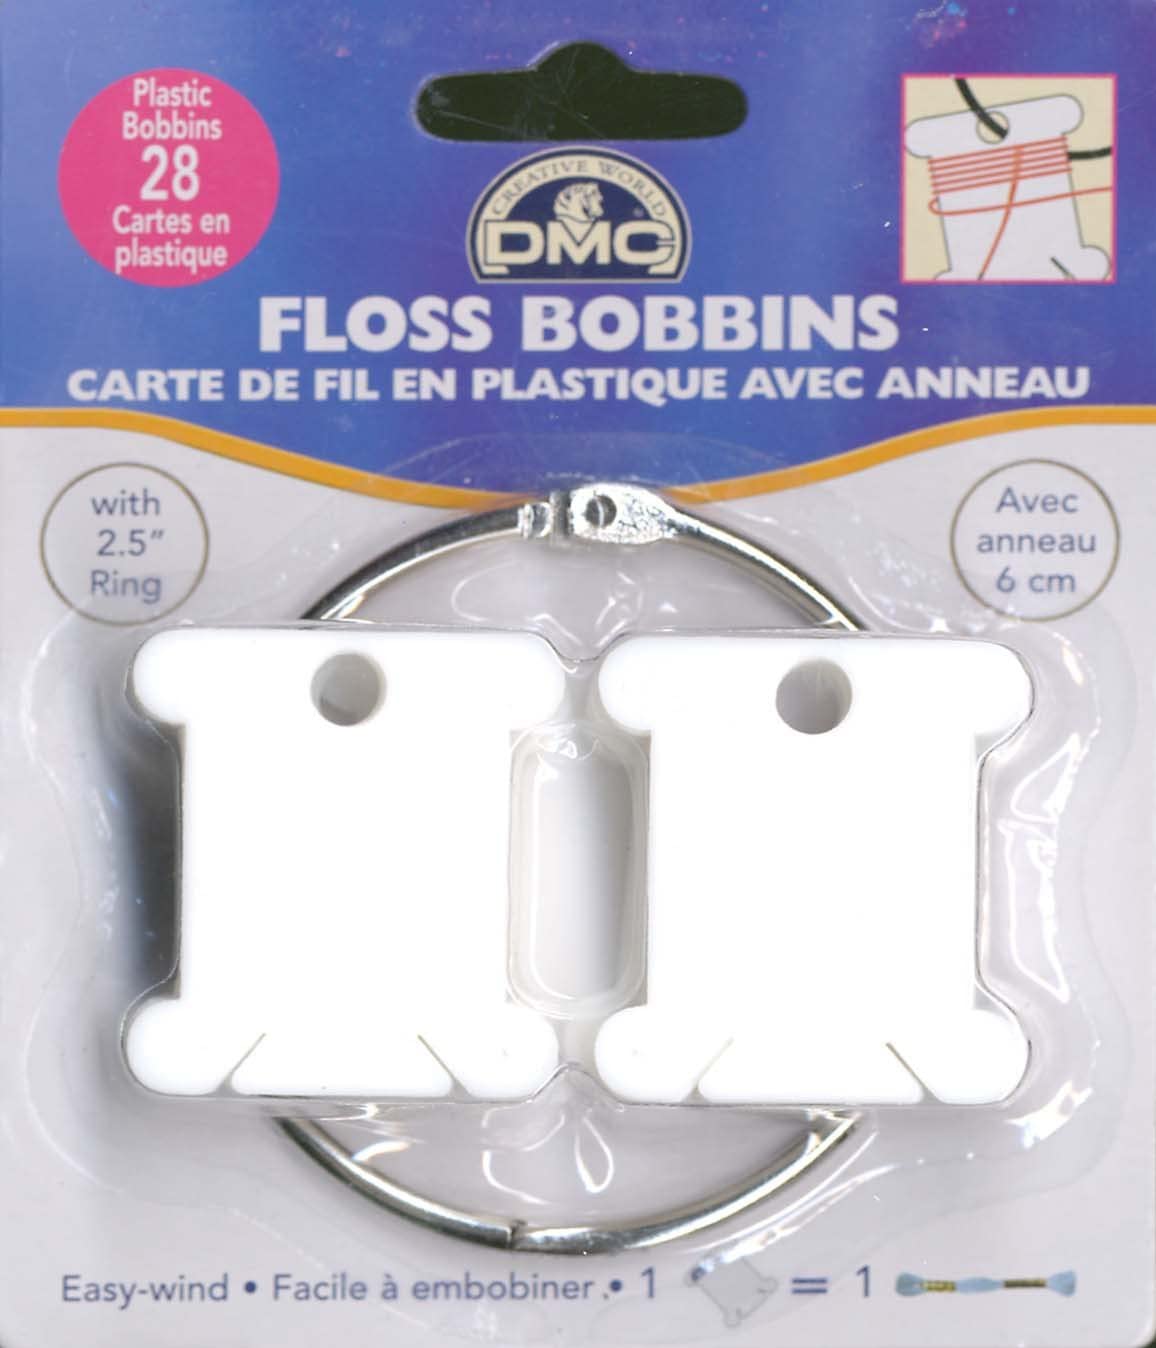 Floss Bobbins for DMC Floss